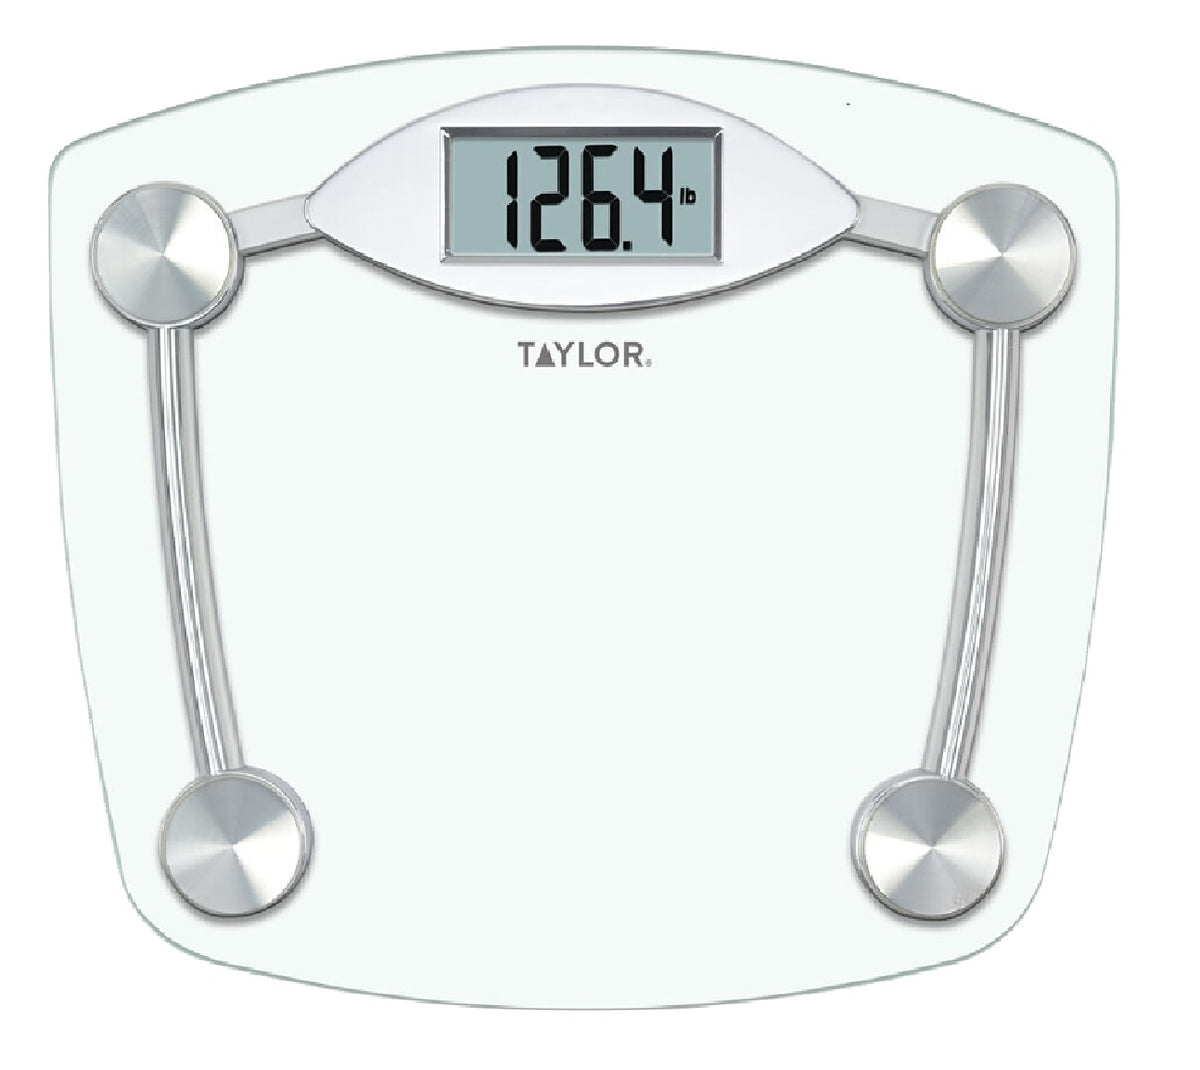 Taylor 75064192 Lithium Digital Glass Bath Scale, Chrome